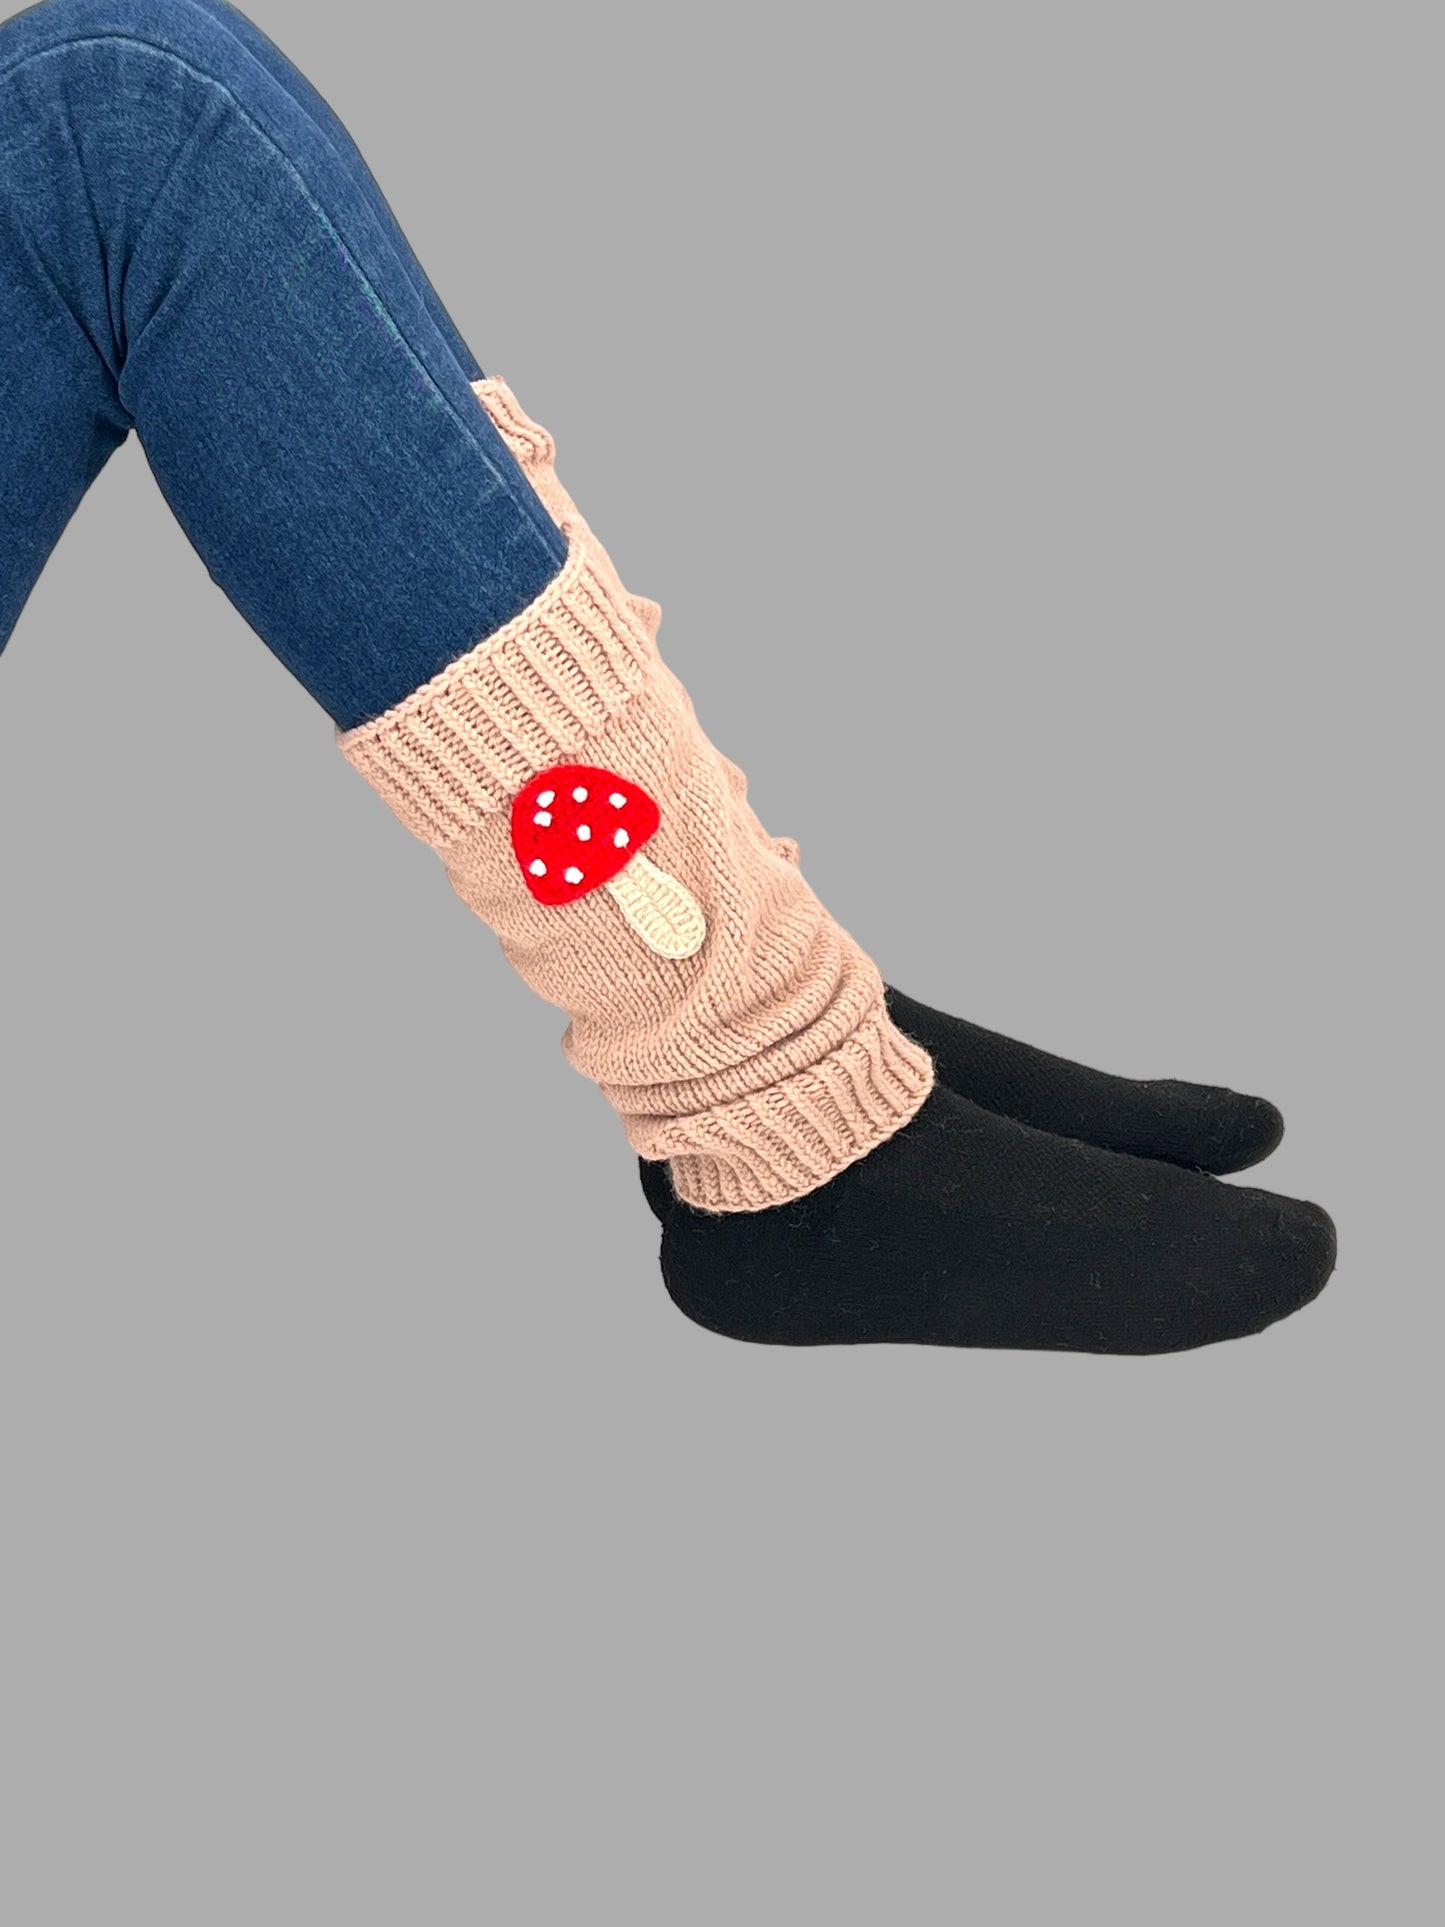 Crochet Mushroom Hand Leg Warmers - Birthday Gift for Girls: Granddaughter, Daughter, Niece. Perfect for Stocking Stuffers, Back to school